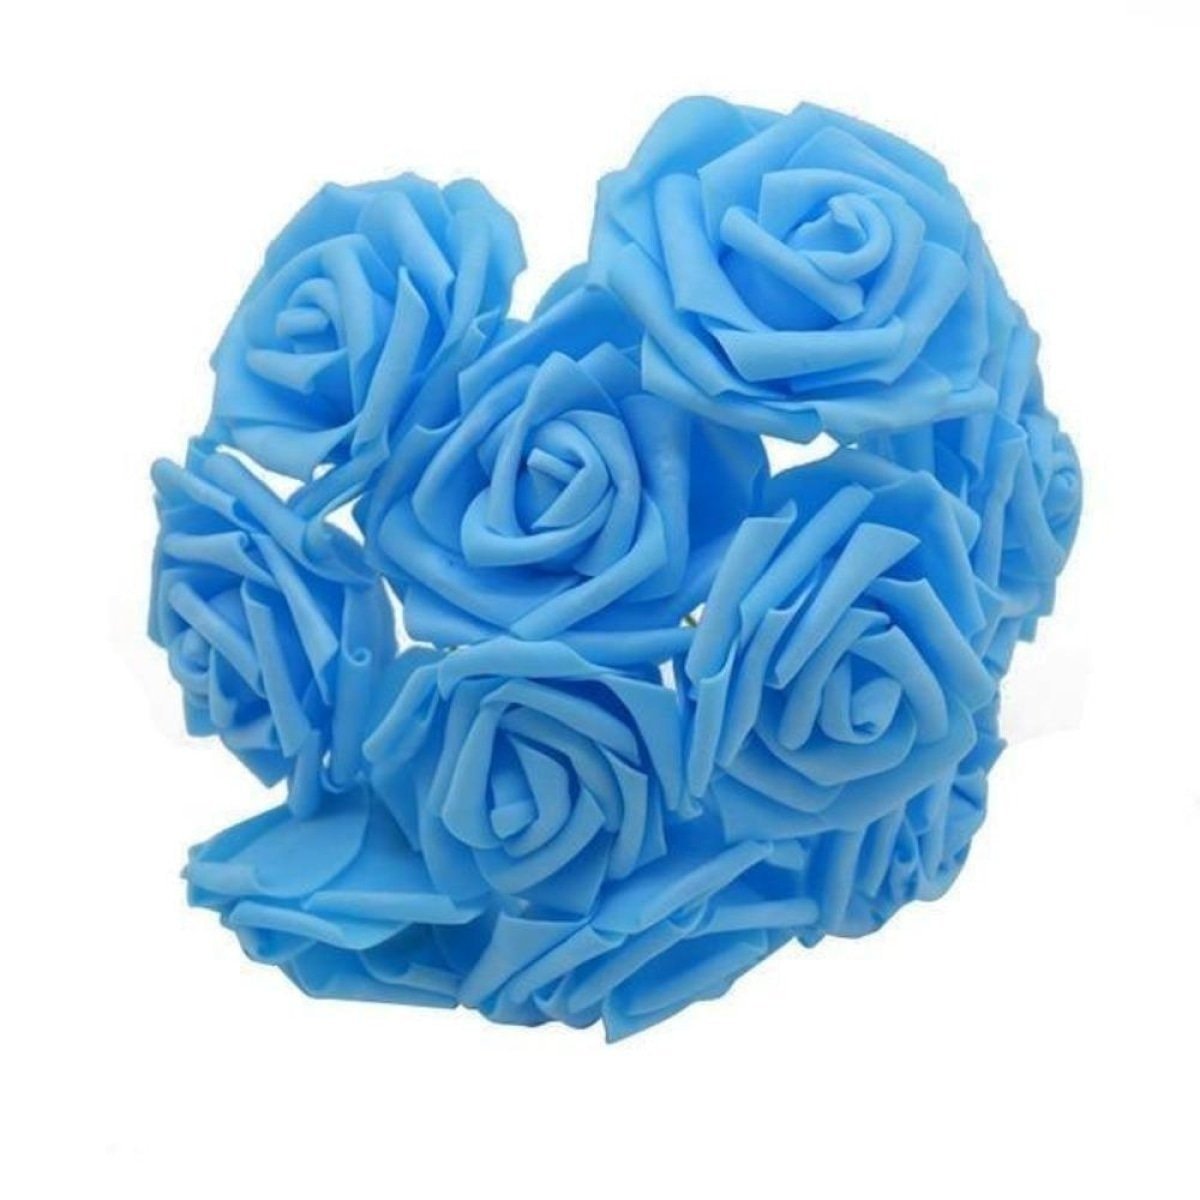 20pcs 8cm Artificial Flowers Foam Rose Fake Bride Bouquet Wedding - Light Blue - - Asia Sell